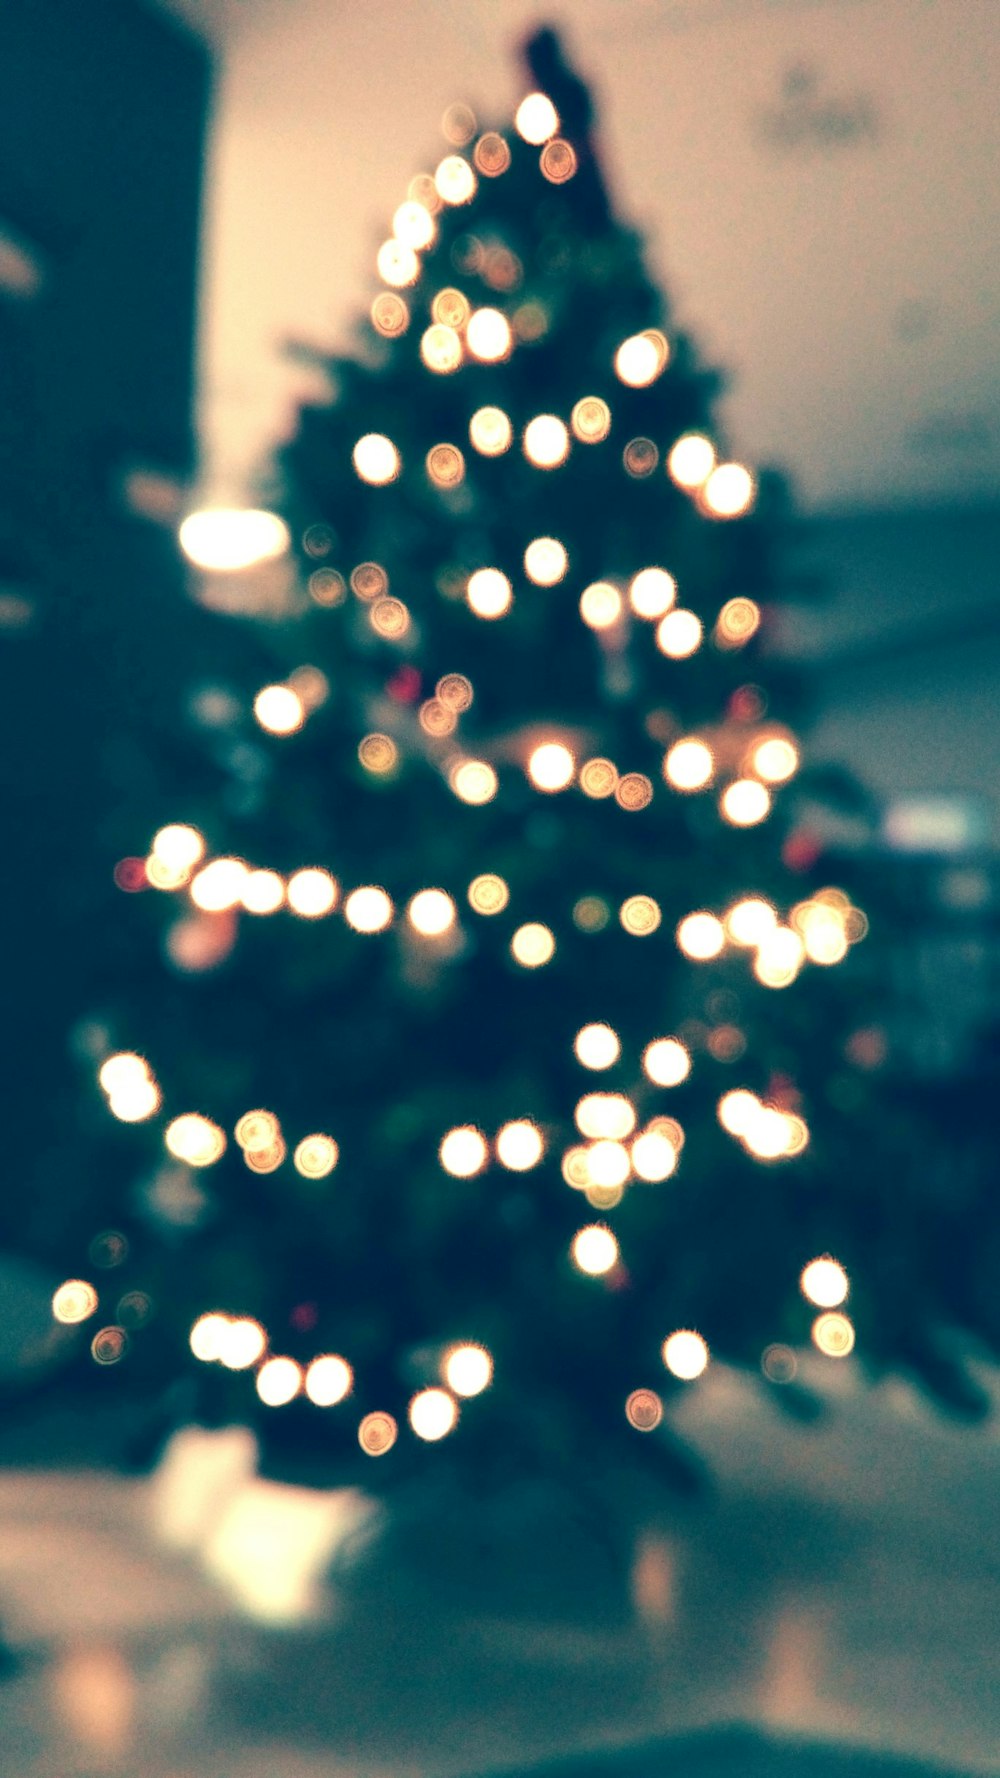 Árvore de Natal com luzes de corda acesas